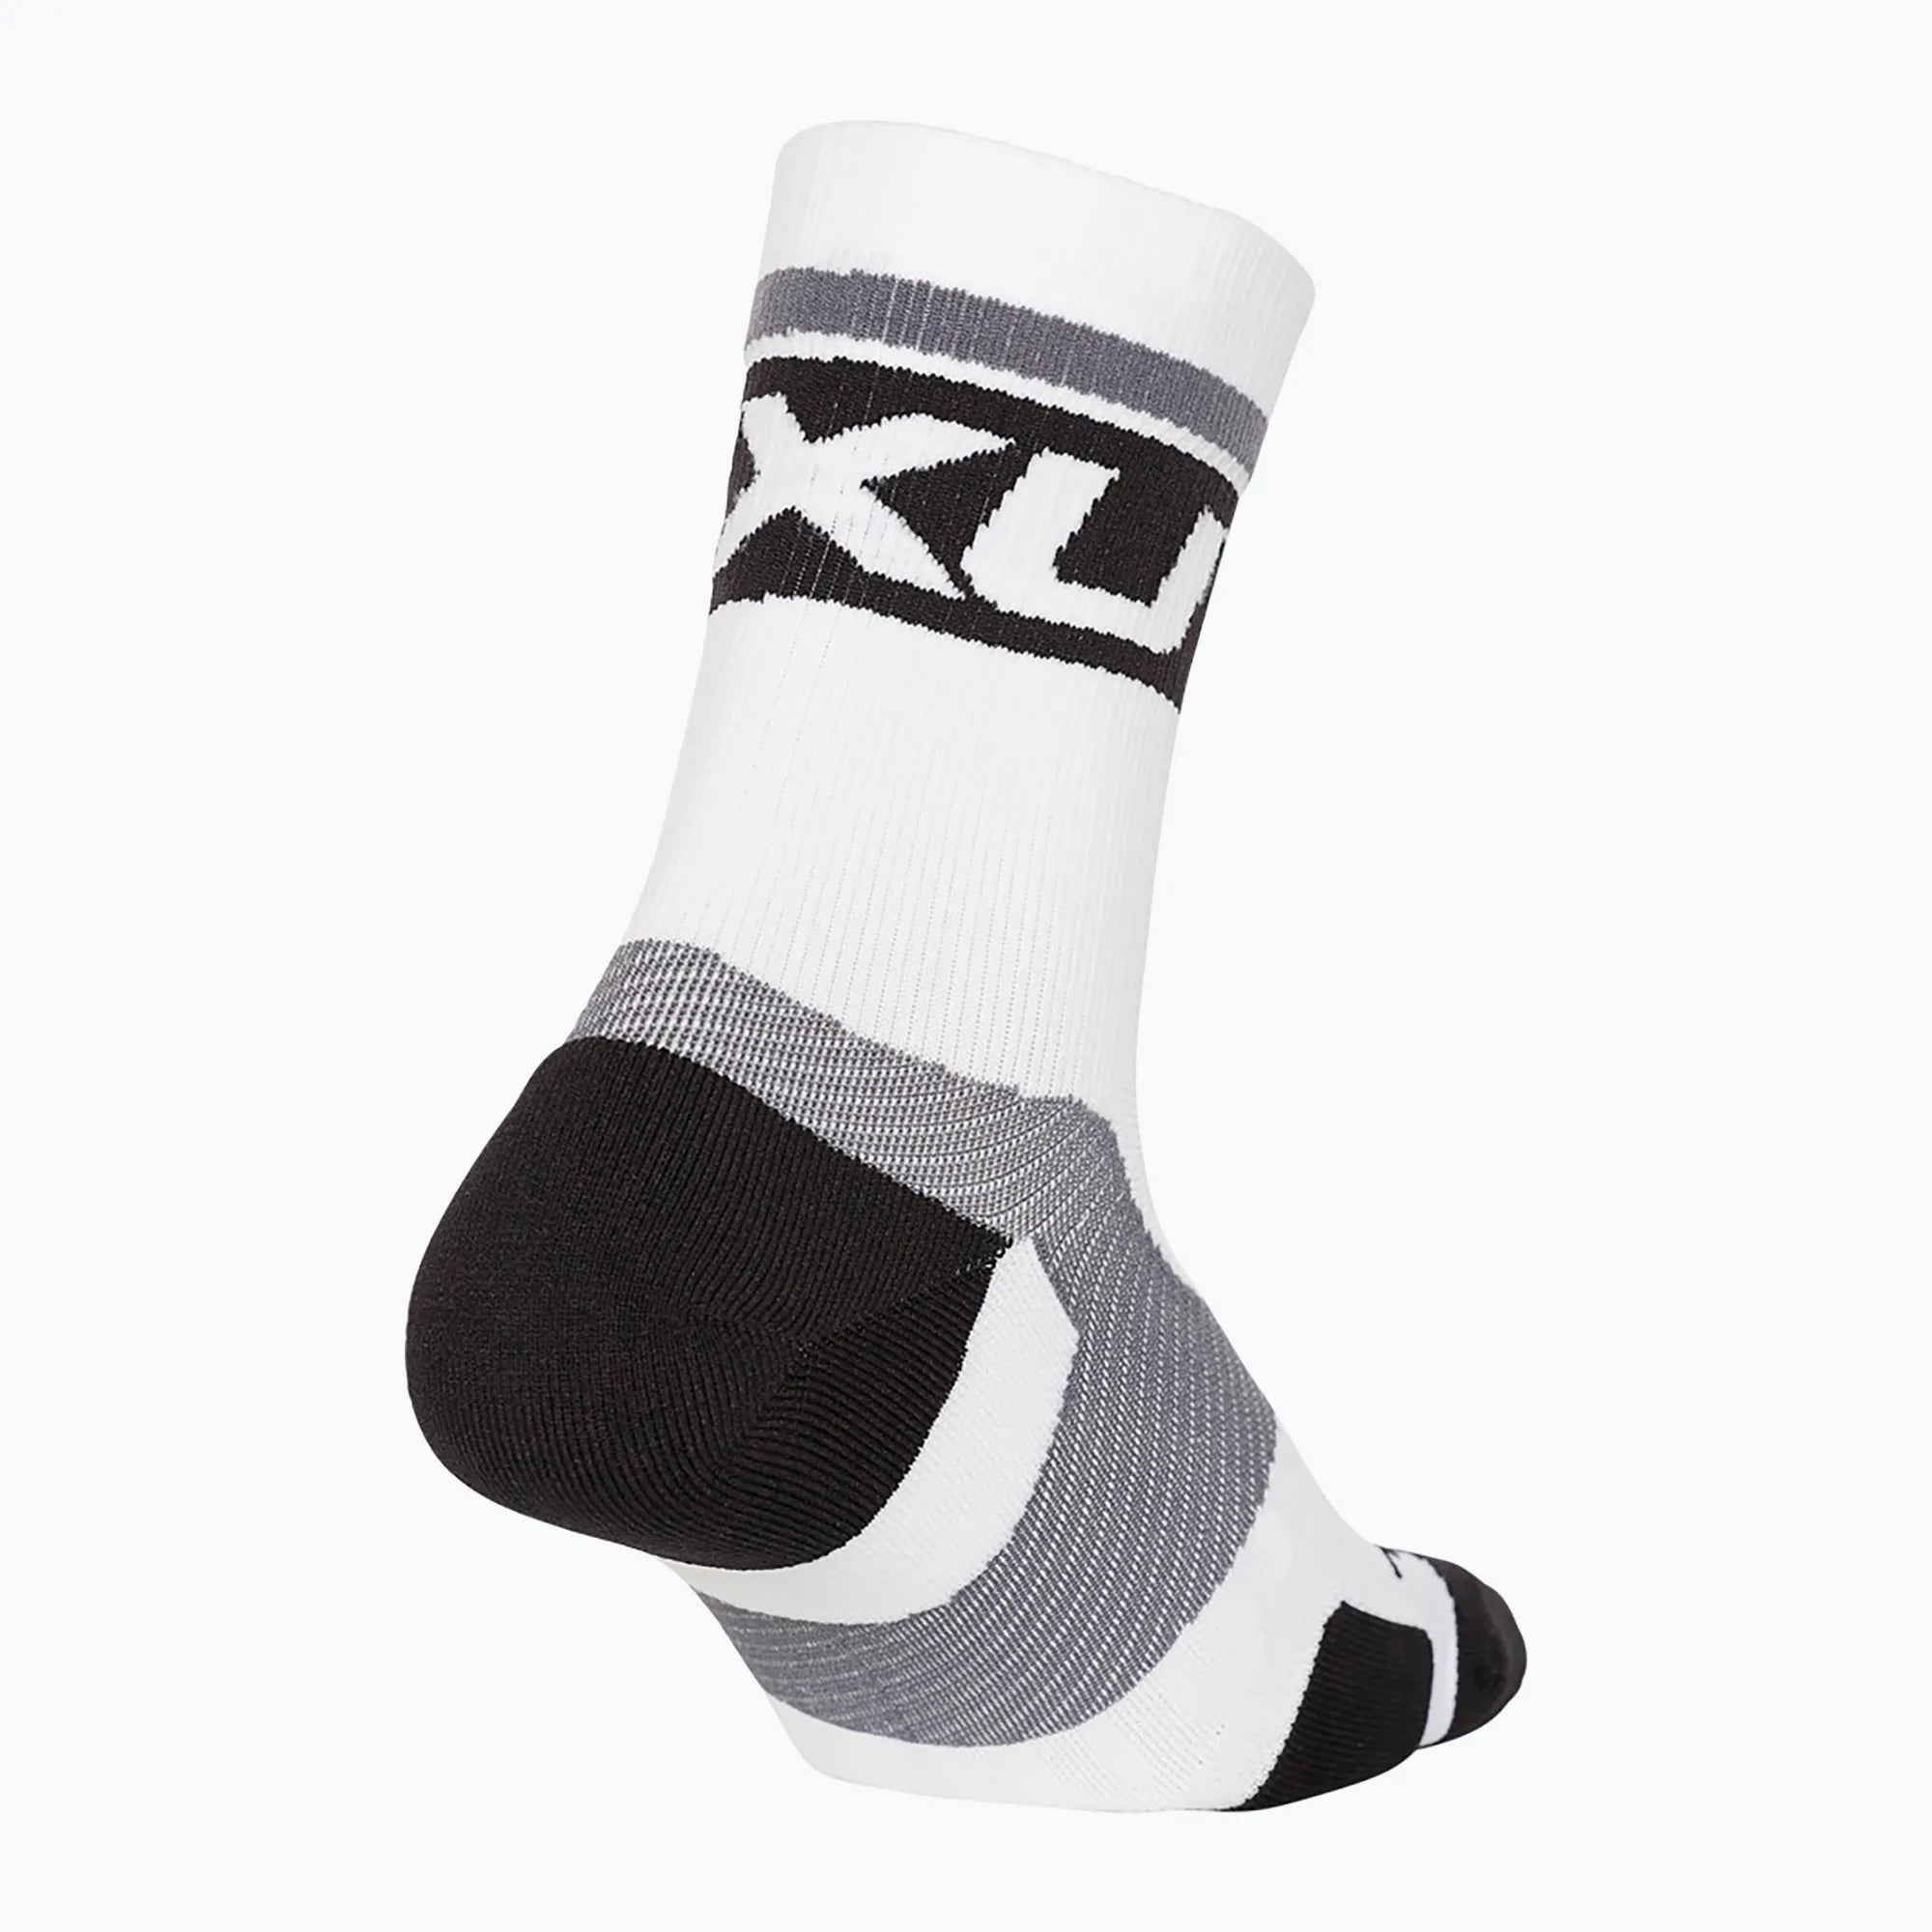 2XU VECTR Cushion Crew Socks, White/Black